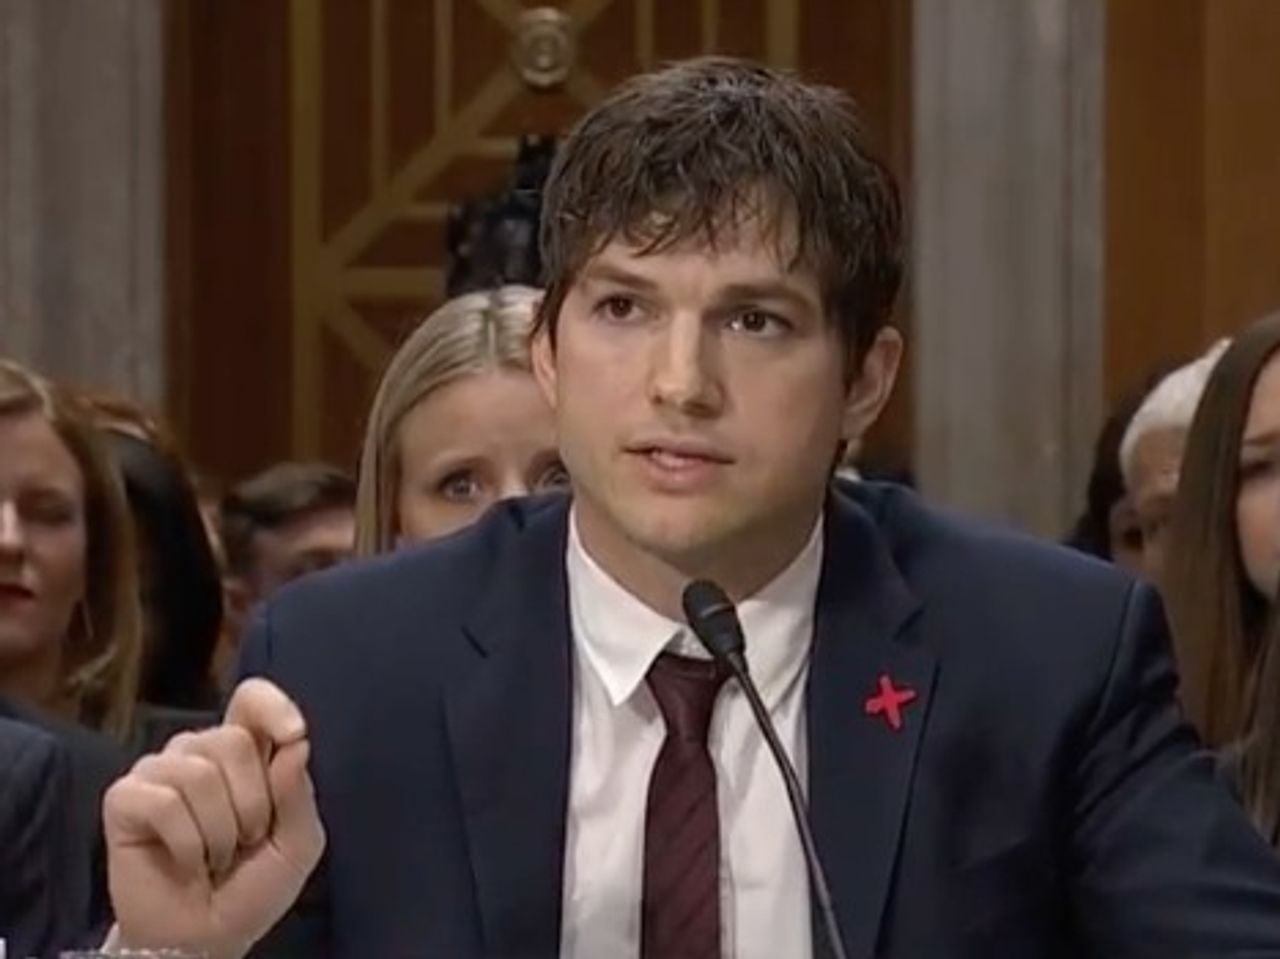 ashton-kutcher-fights-to-end-human-trafficking-in-emotional-testimony-to-senate